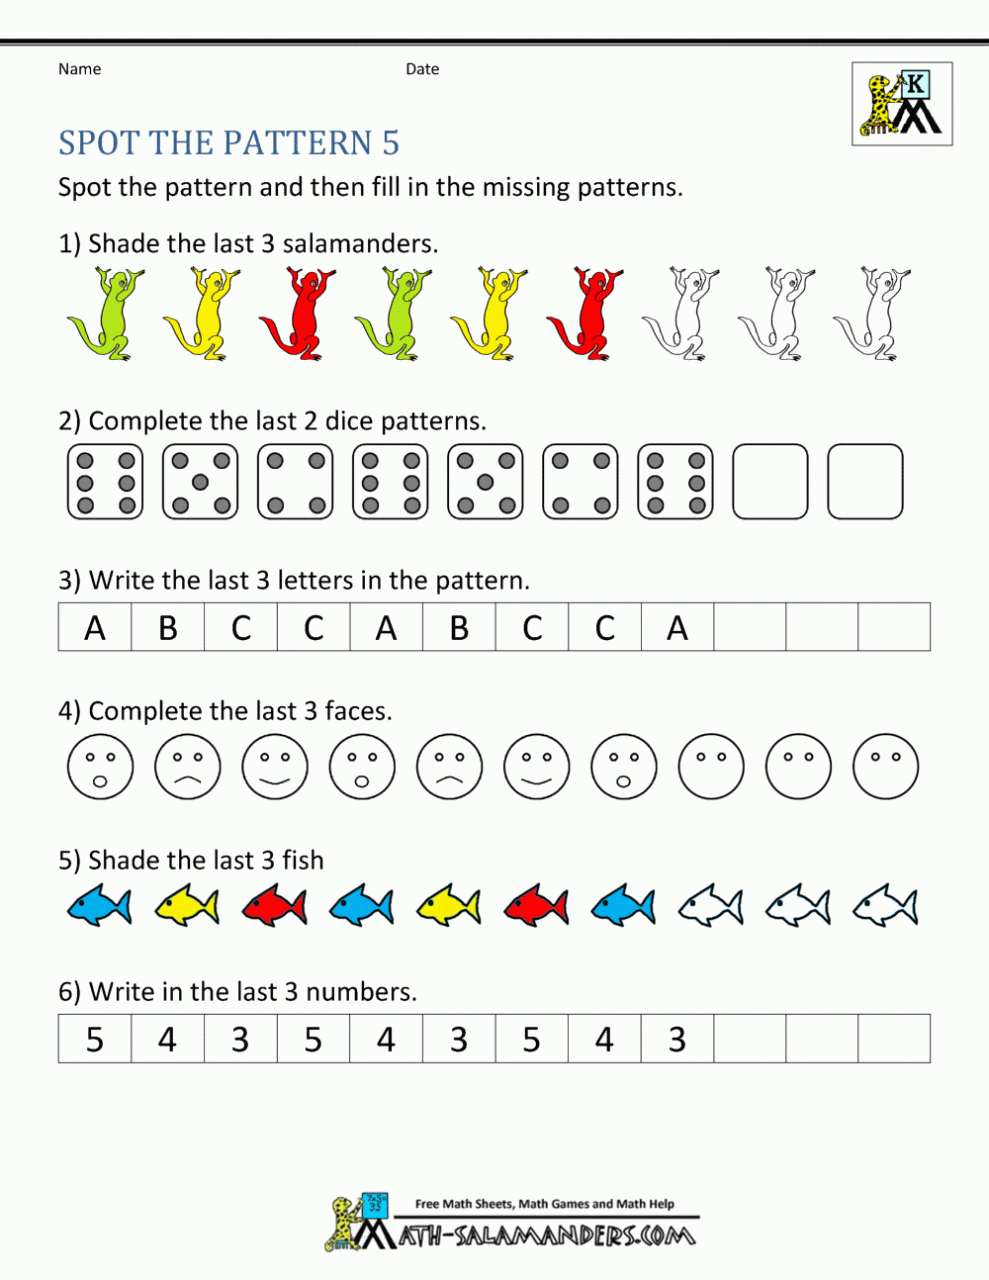 Free Printable Kindergarten Math Pattern Worksheets